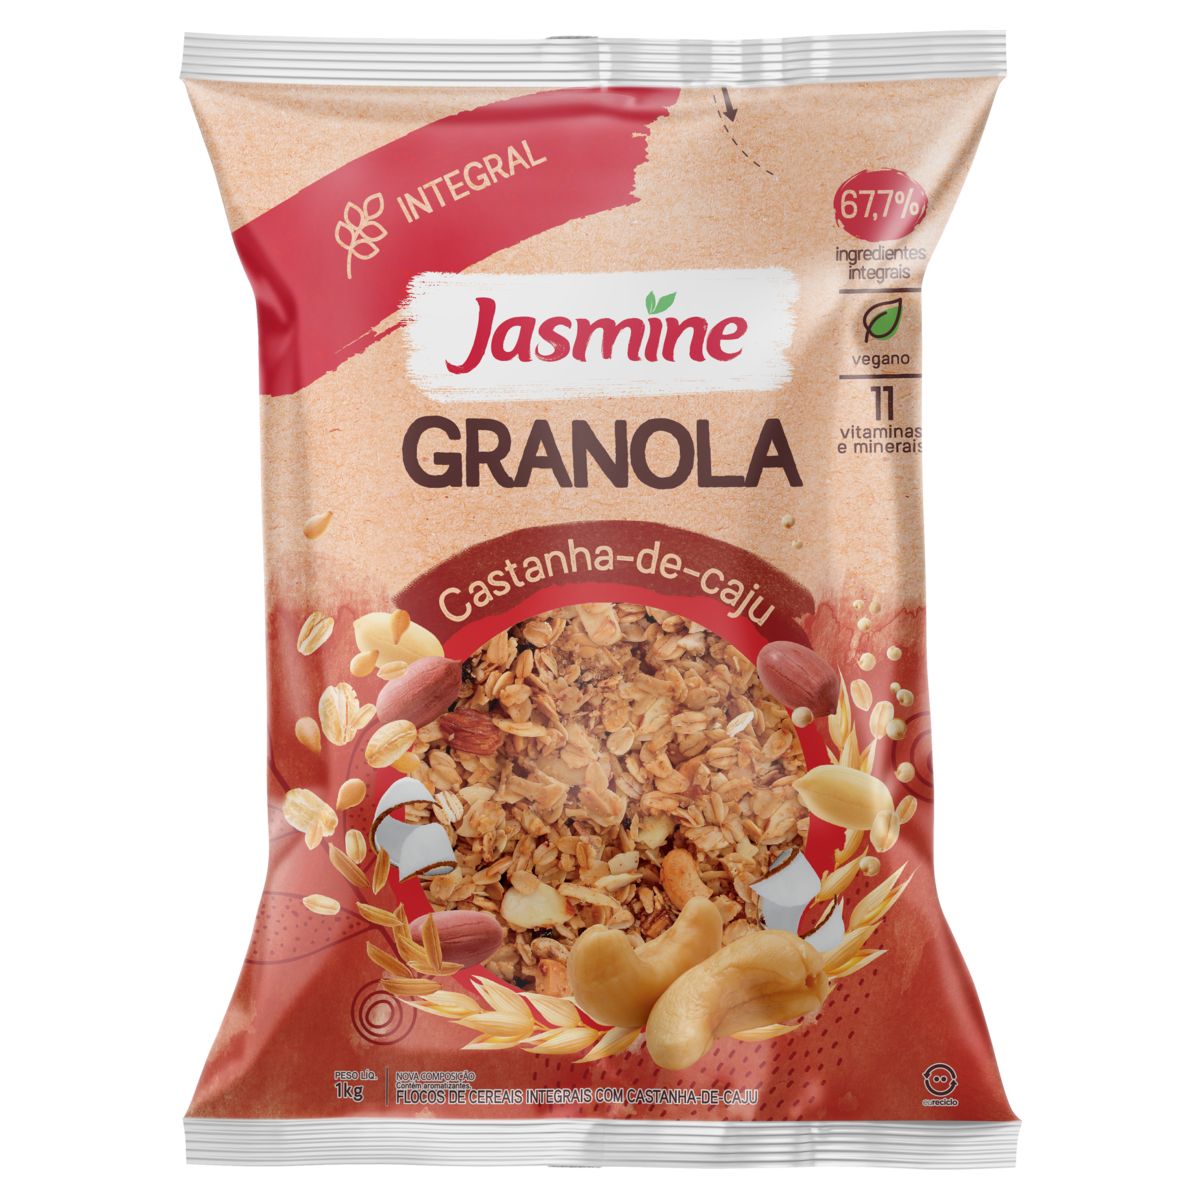 Granola Jasmine Castanha-de-Caju 67,7% Integral Pacote 1kg image number 0